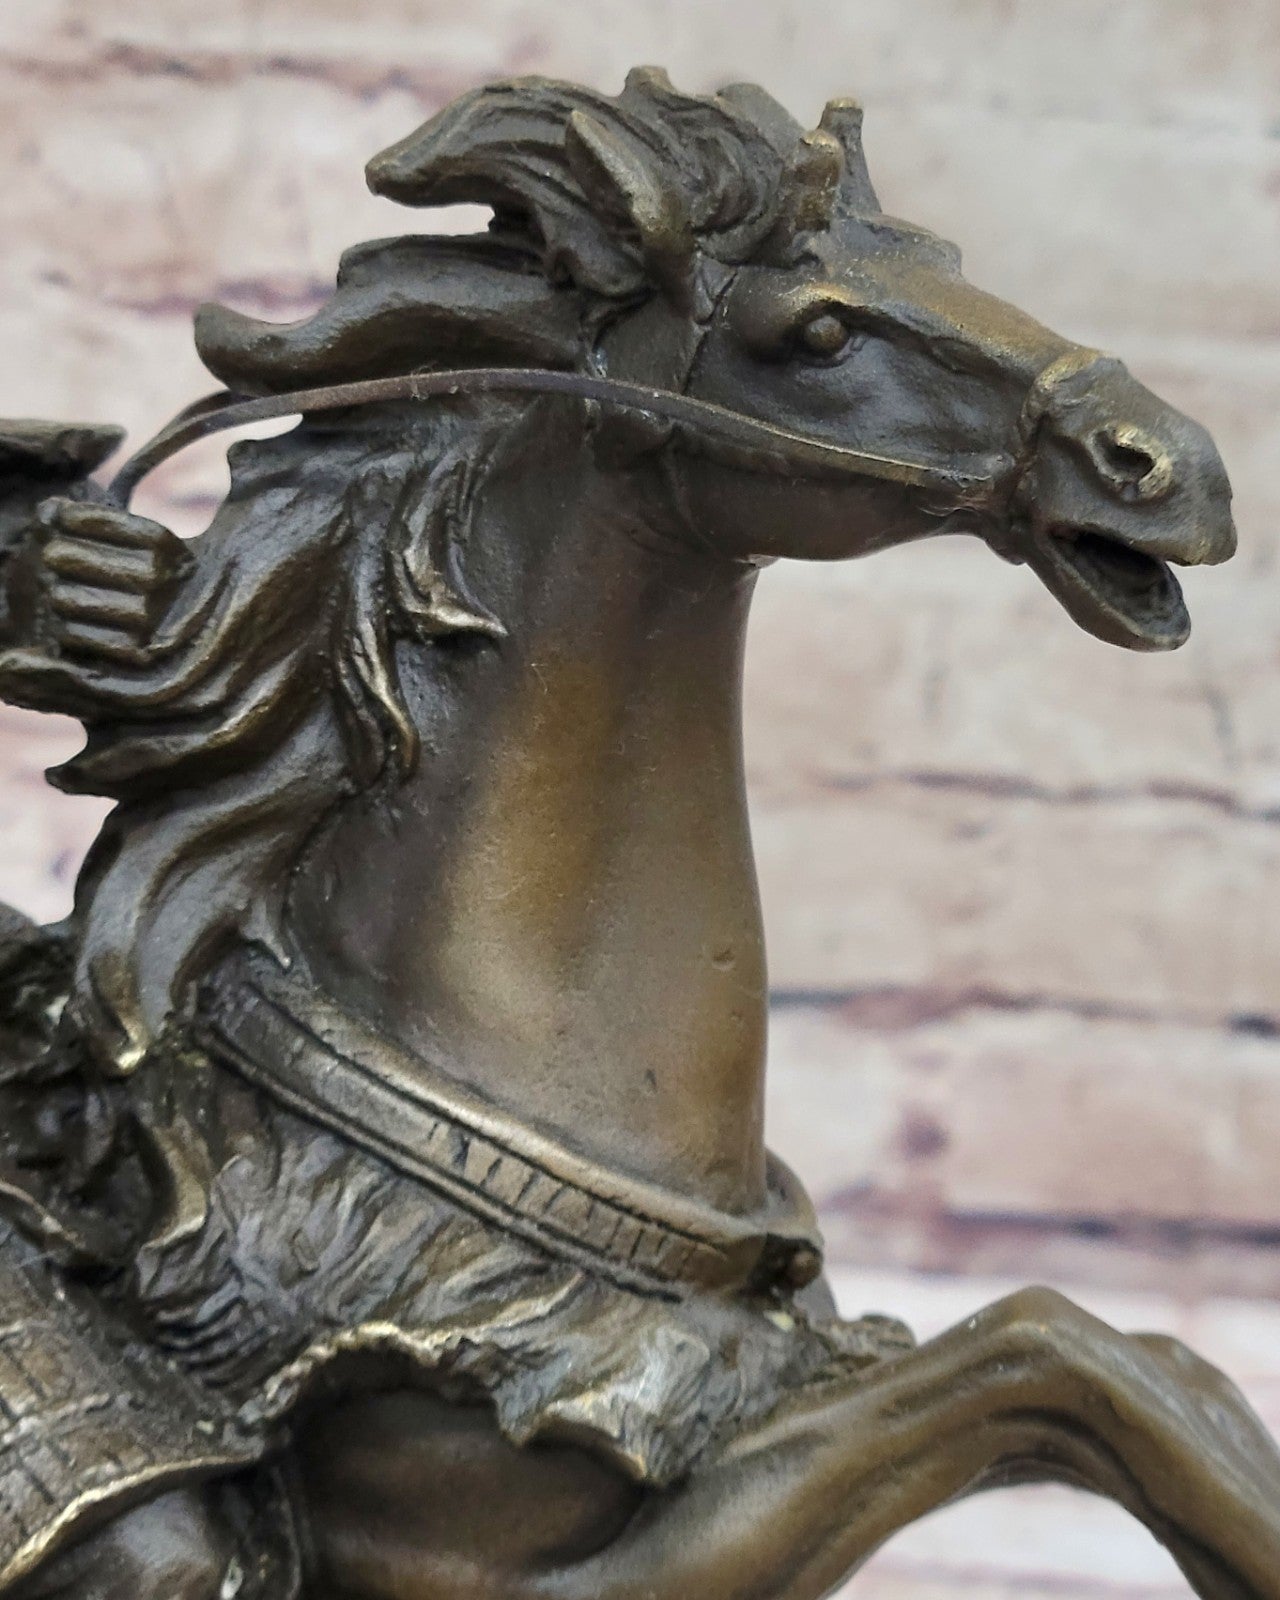 Handcrafted bronze sculpture SALE Hot Horse On Samurai Warrior Japanese Pure